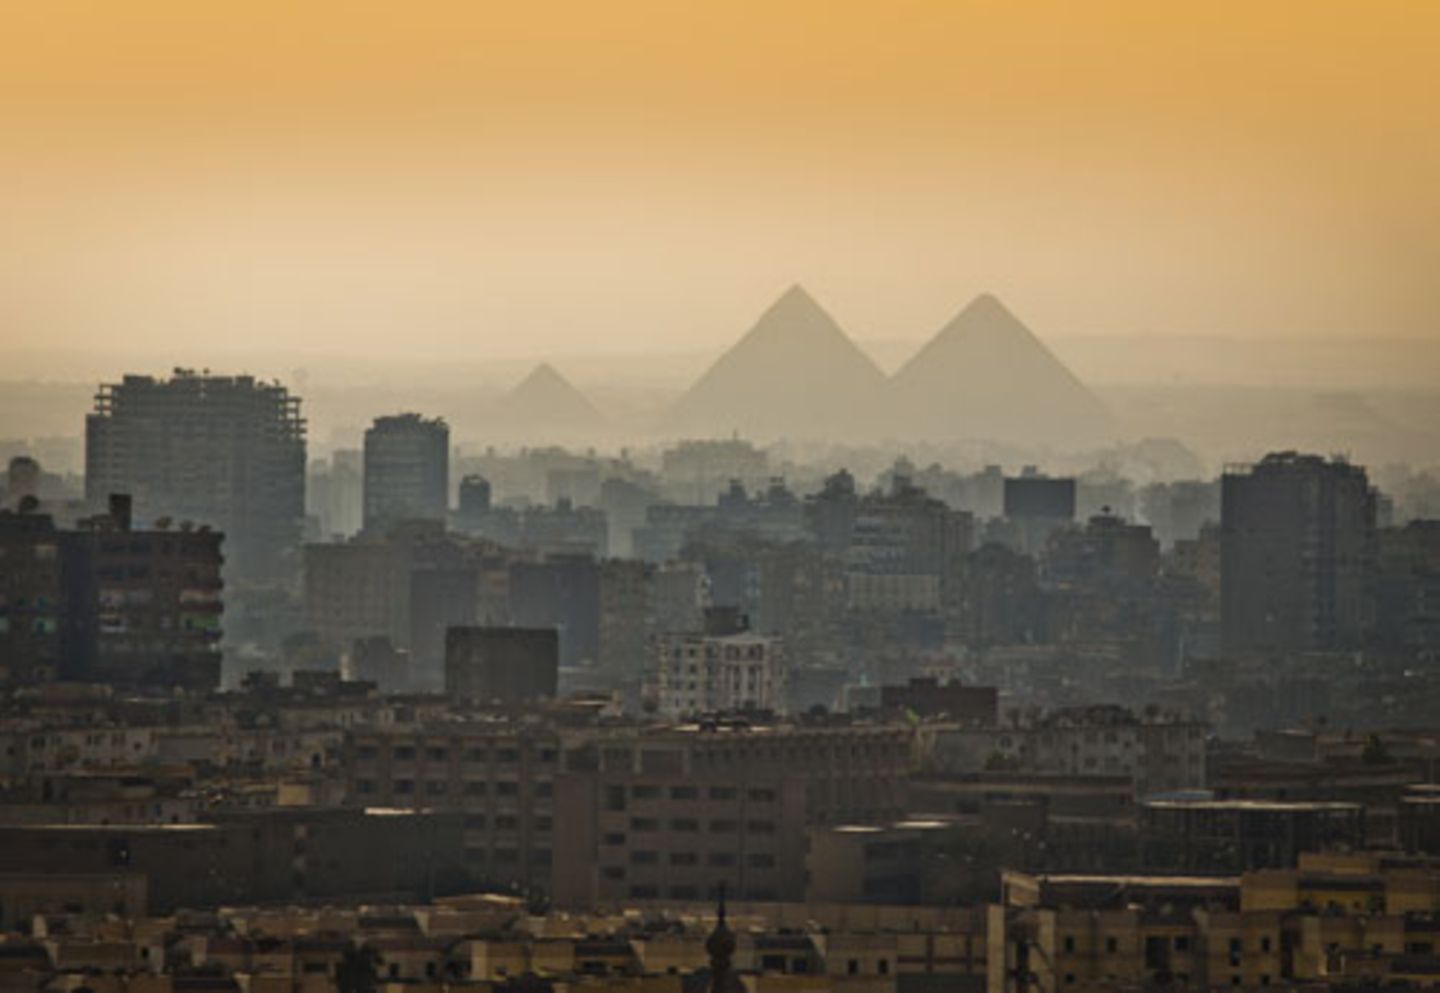 ... im Smog von Kairo